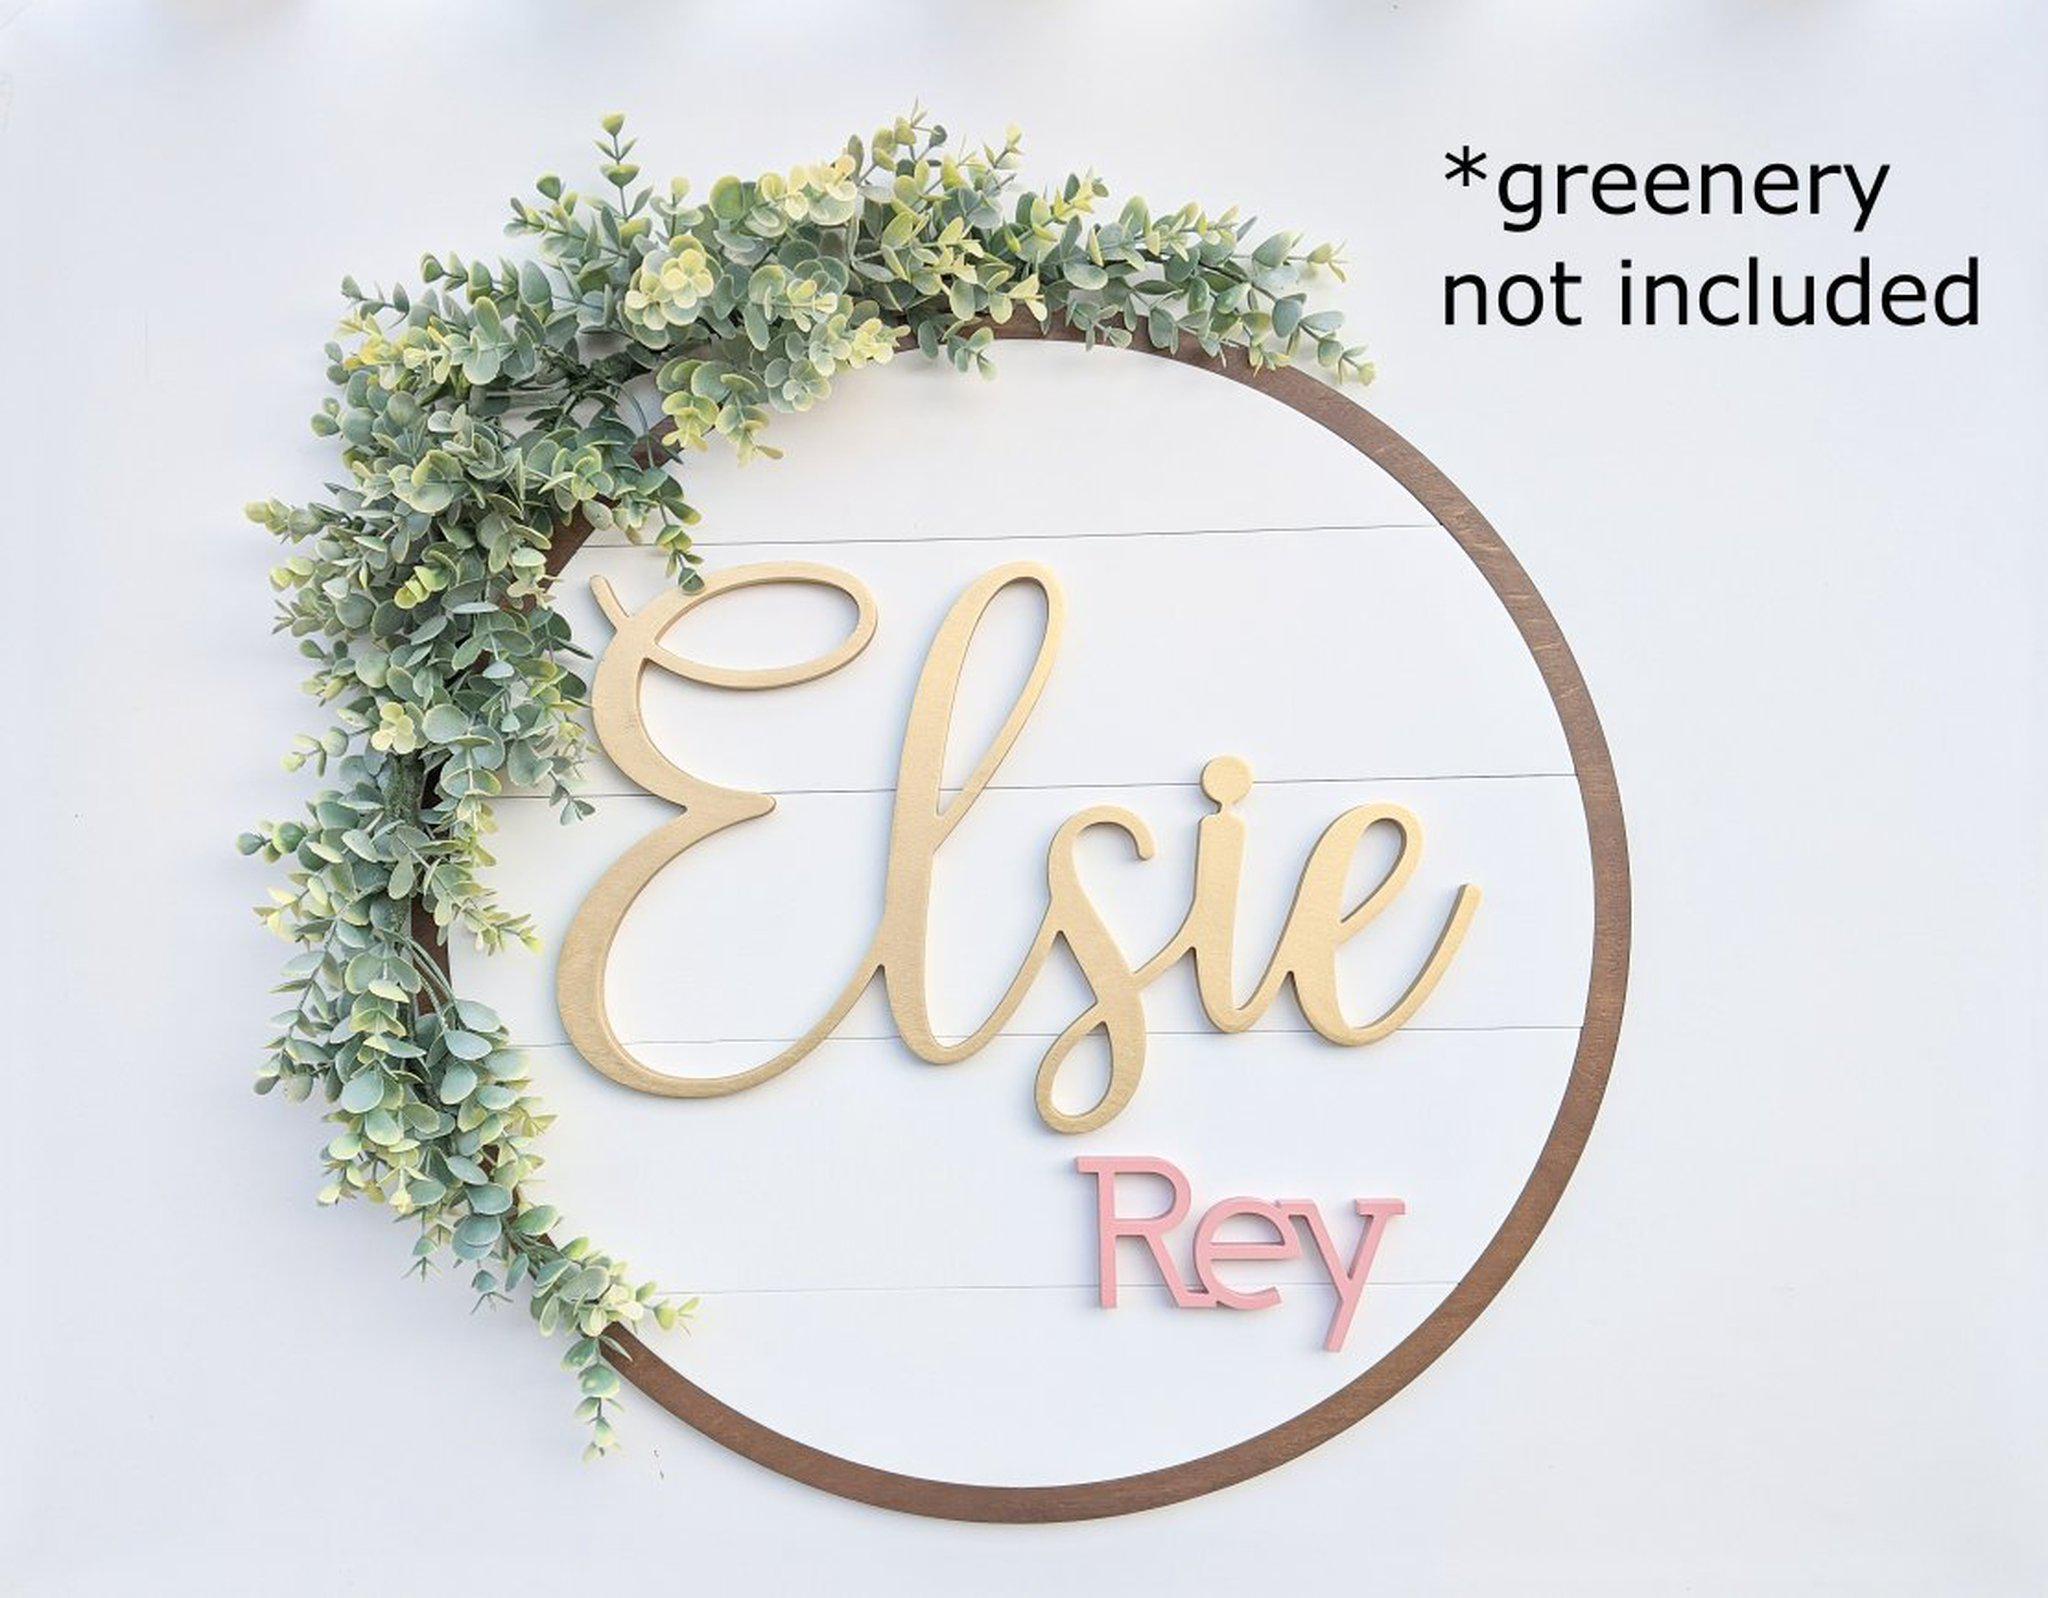 Name Sign - Elsie Rey Style